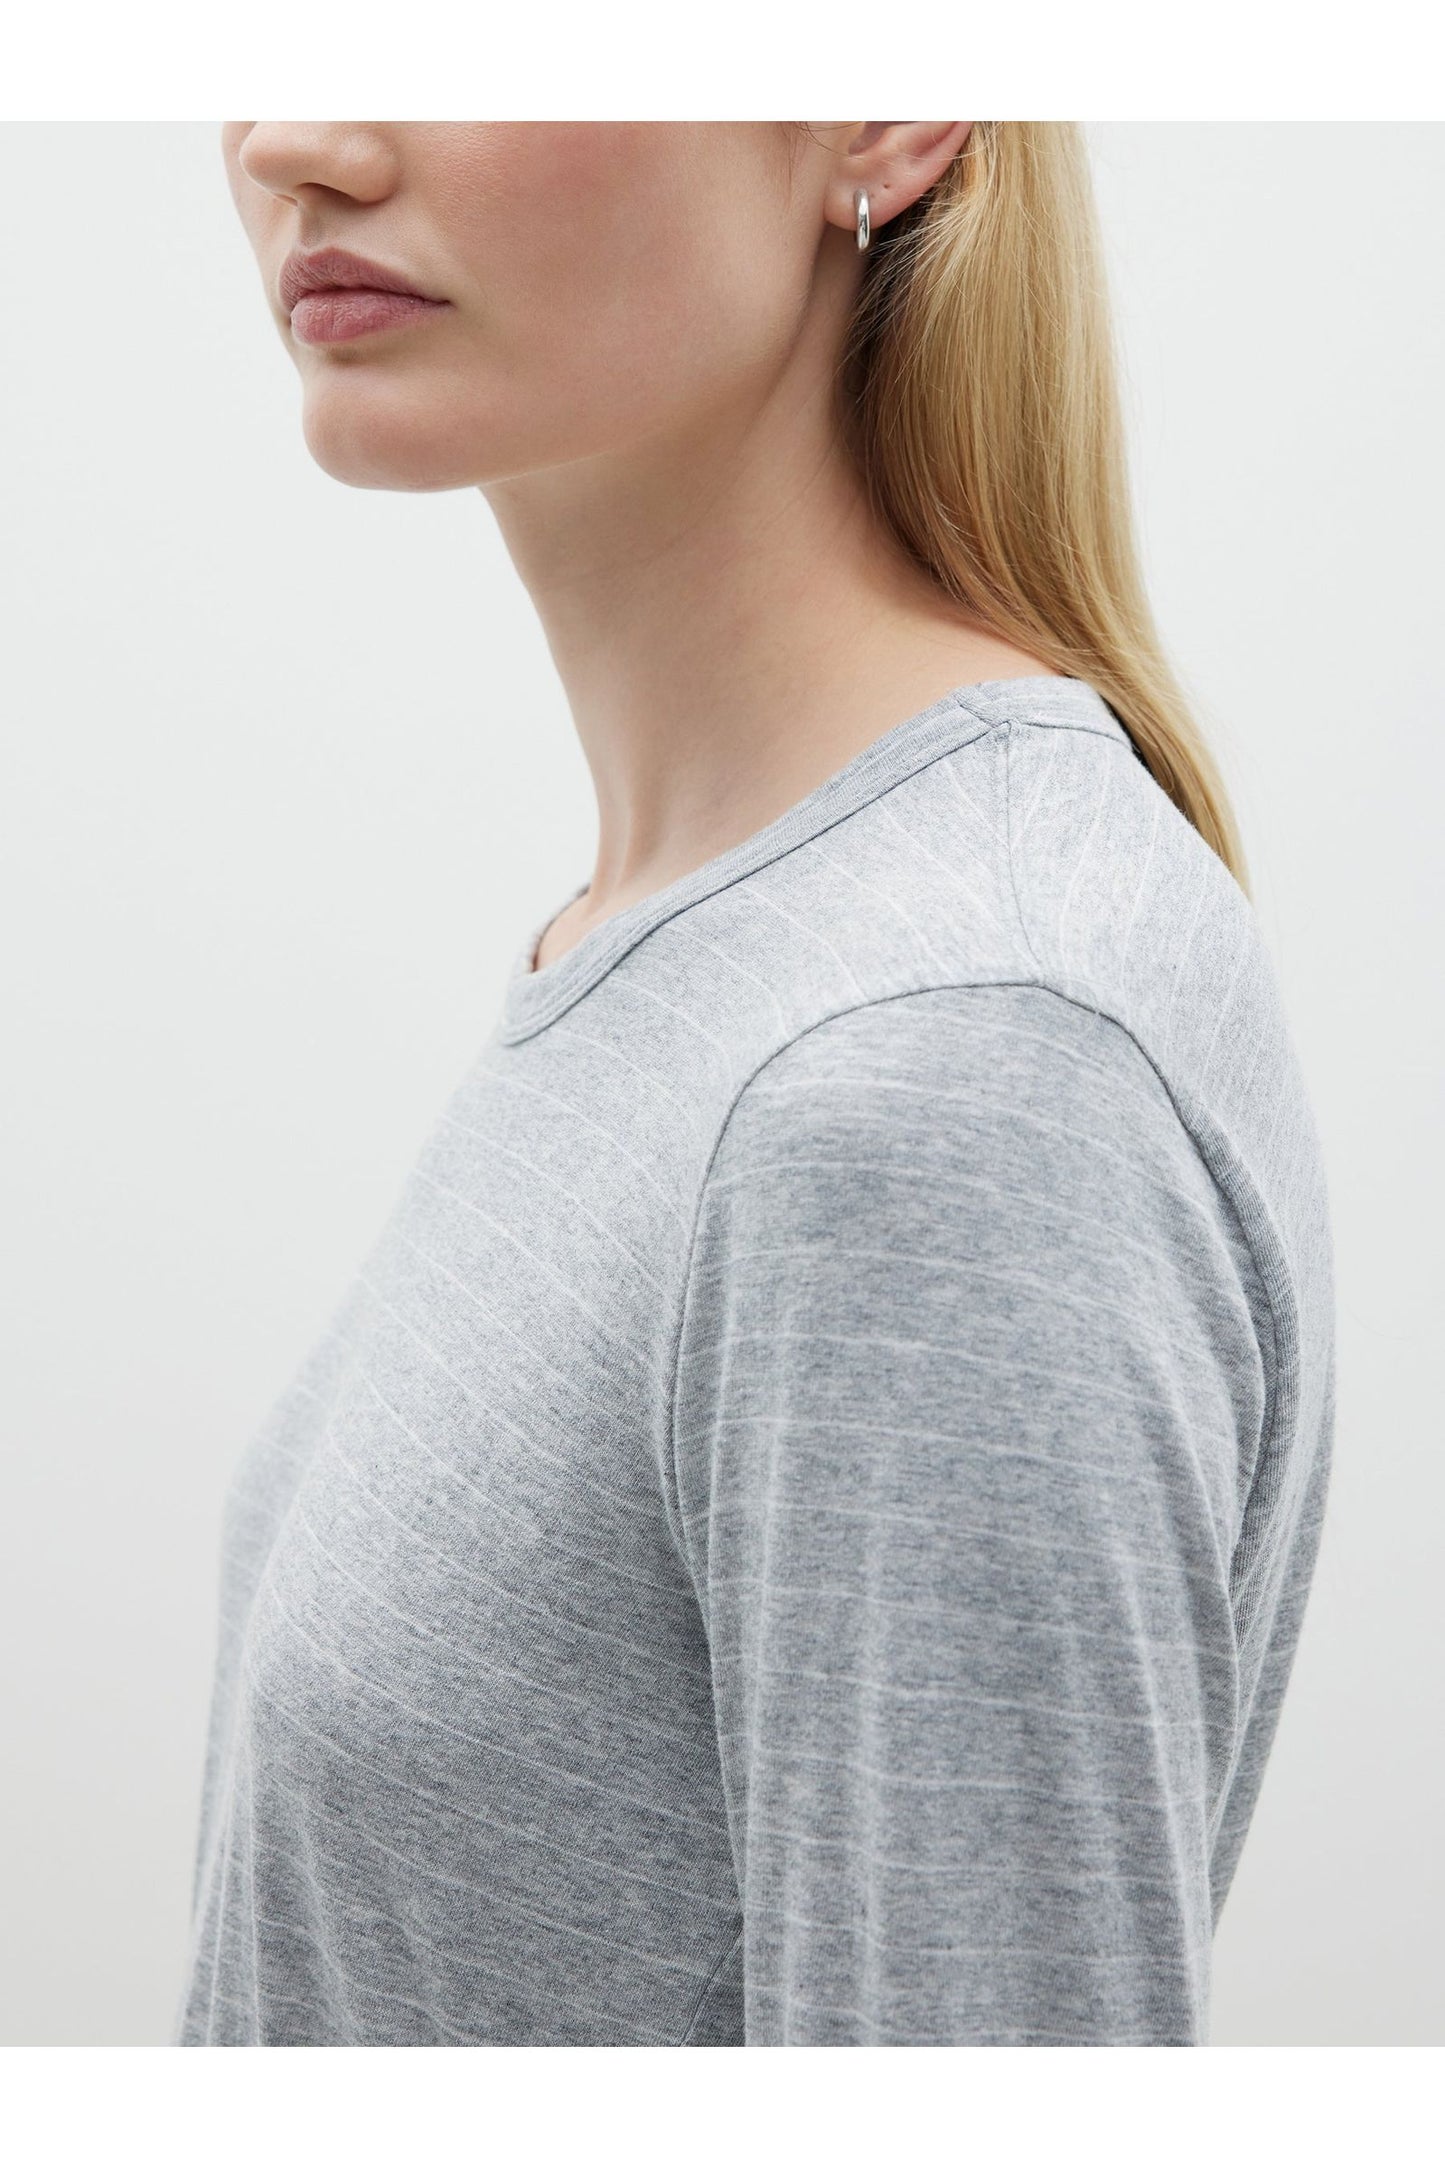 Stripe Regular Longsleeve T-shirt in Grey Marl/Undyed